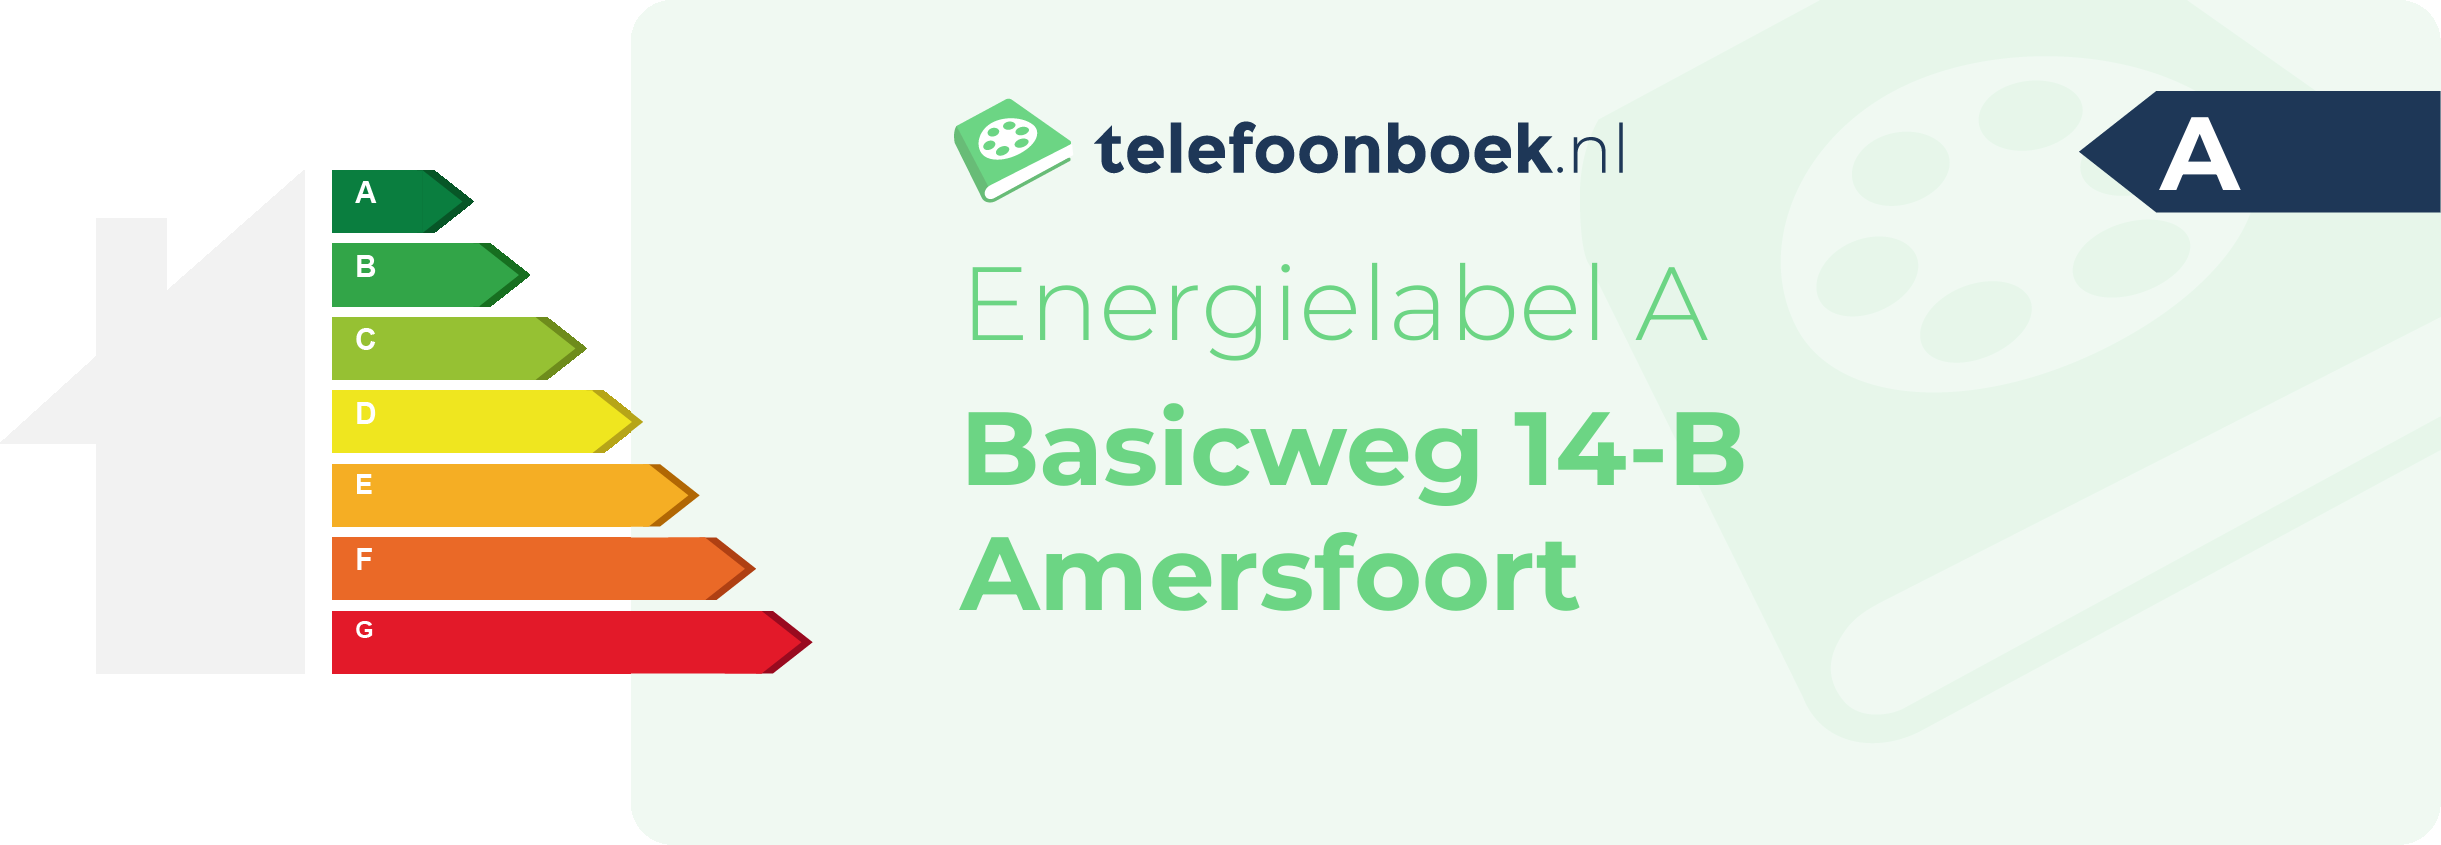 Energielabel Basicweg 14-B Amersfoort